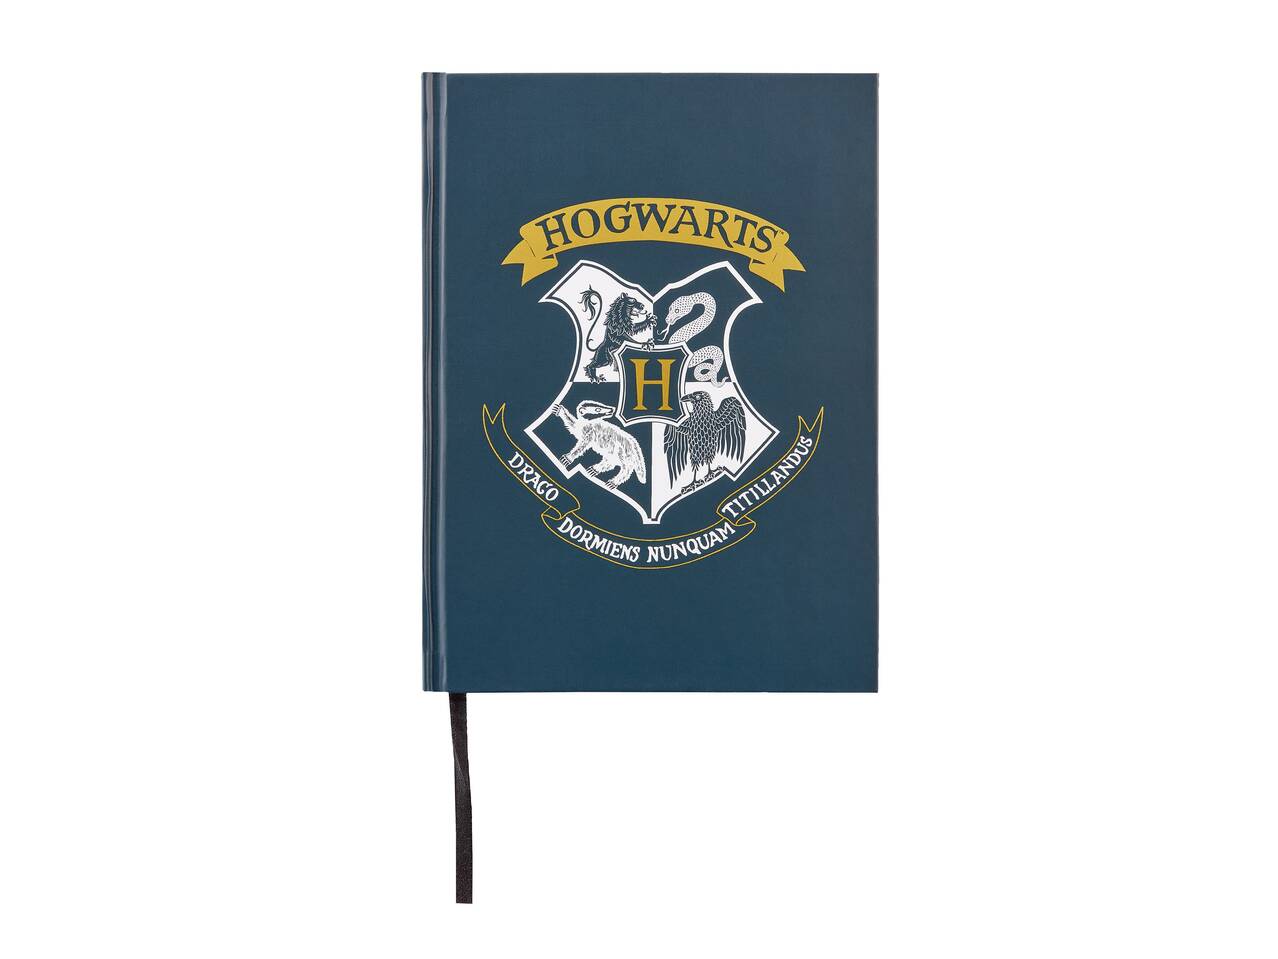 Notatnik Harry Potter , cena 12,99 PLN 
Notatnik Harry Potter 4 wzory 
- ok. 16,2 ...